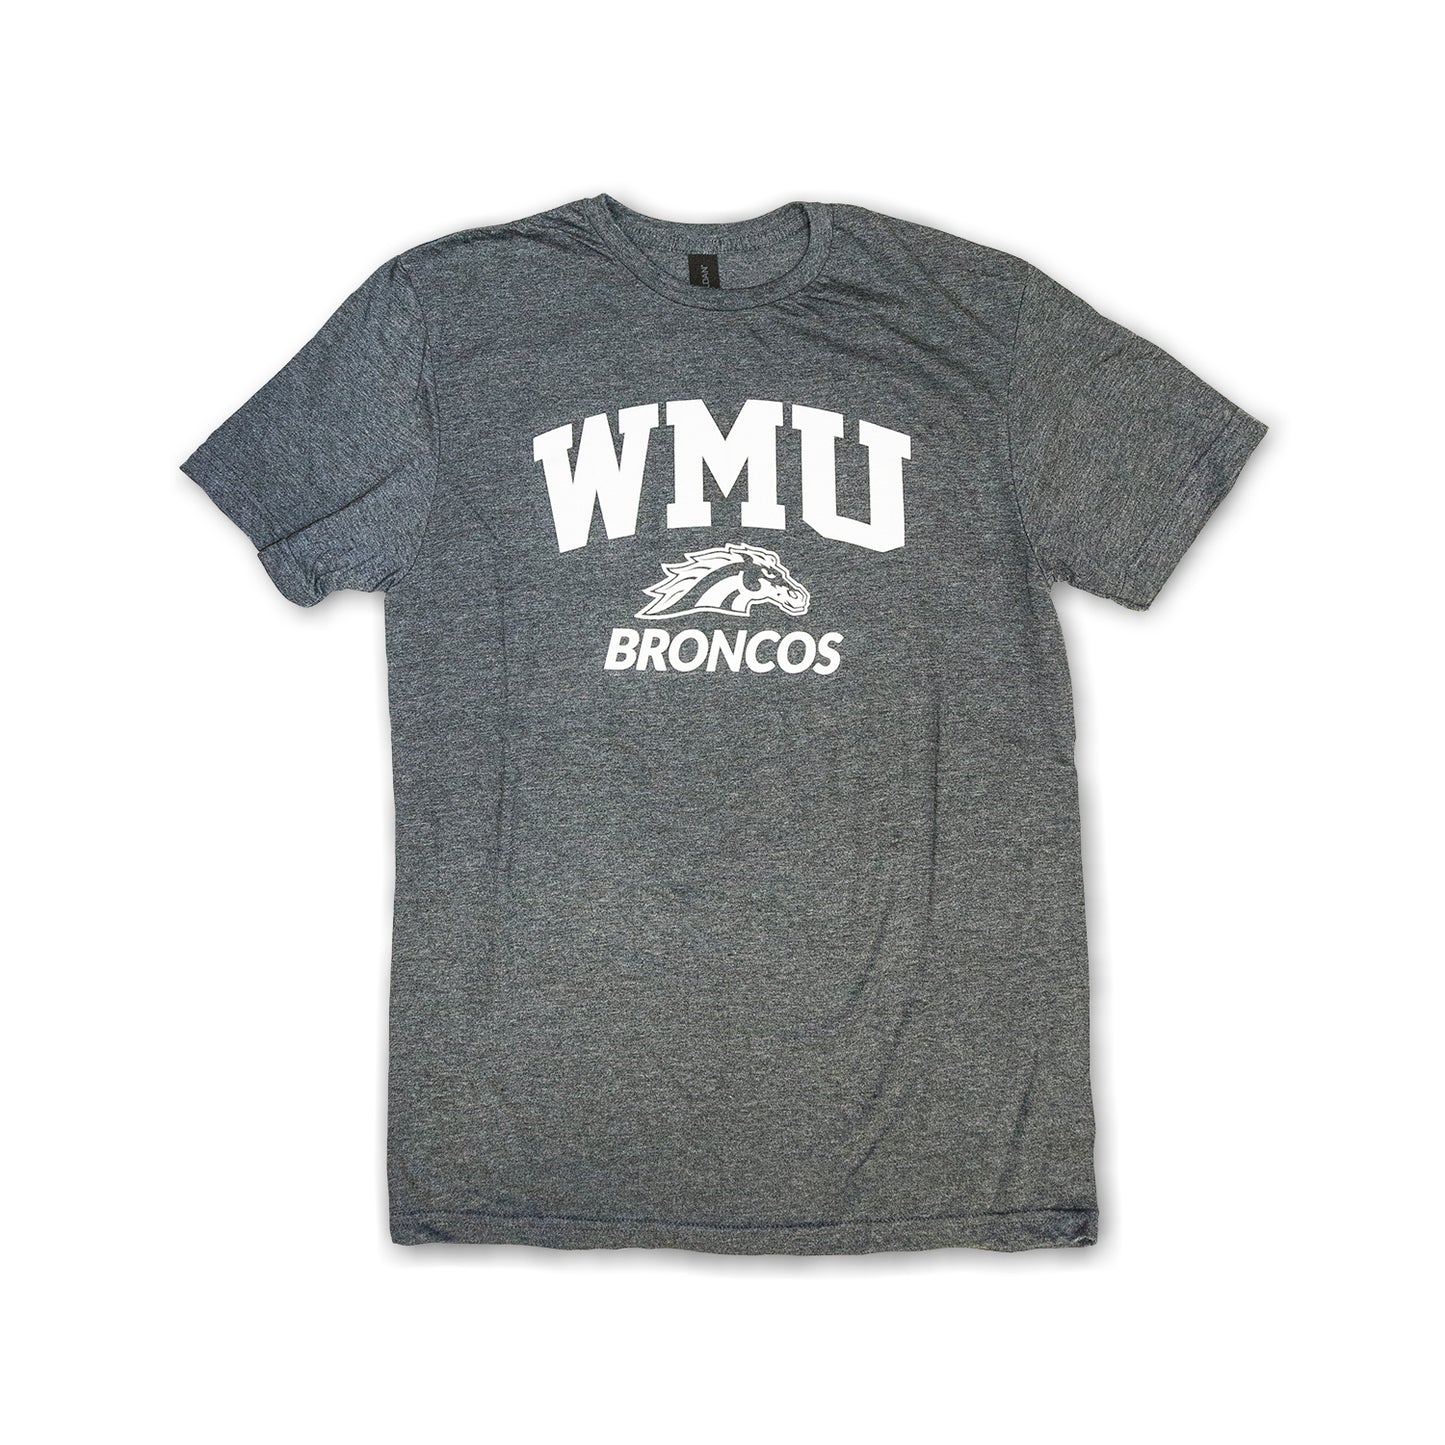 WMU Broncos Tee